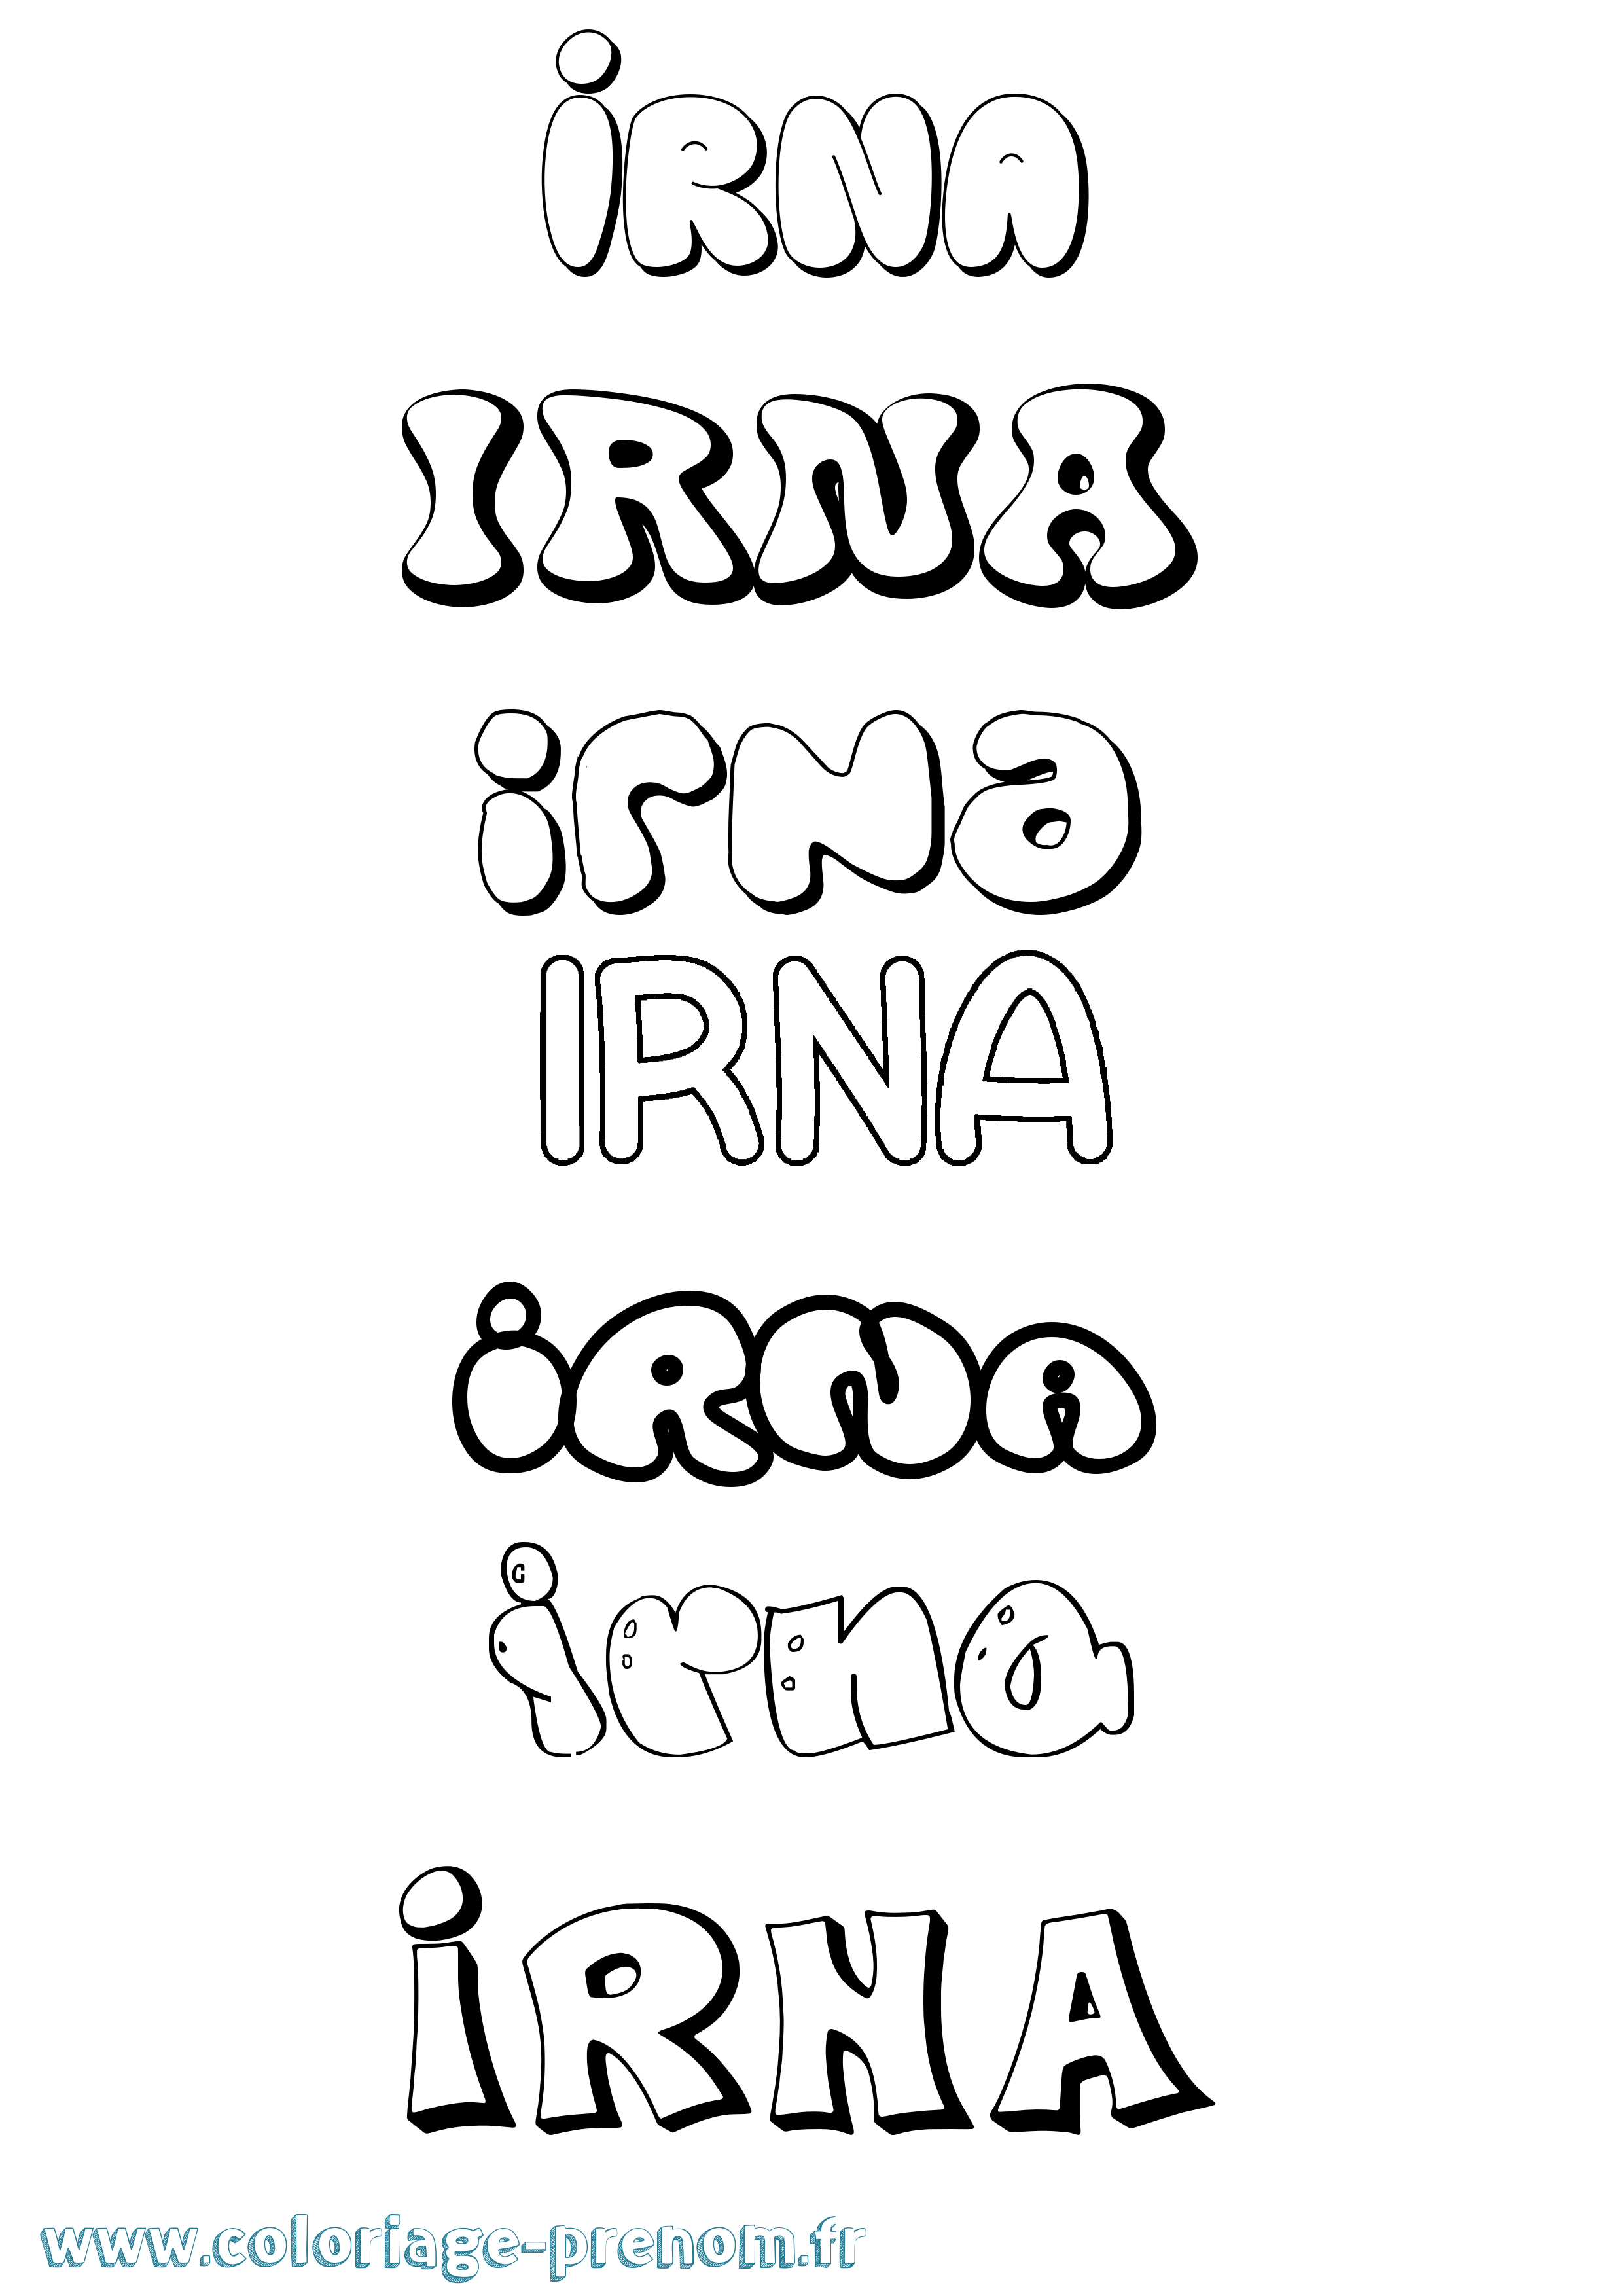 Coloriage prénom Irna Bubble